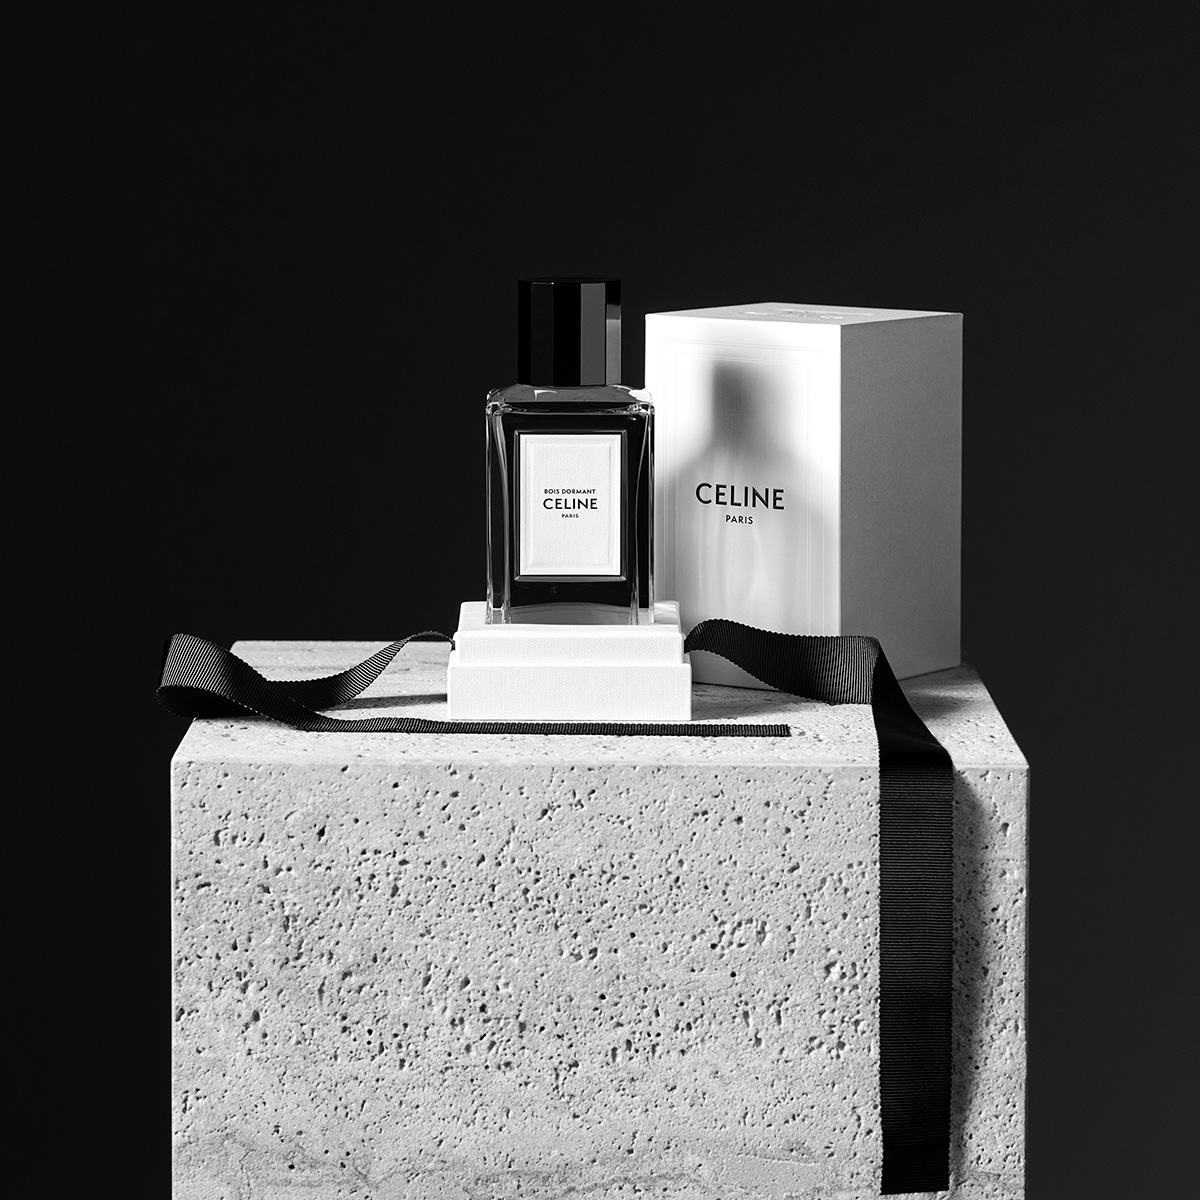 Celine’s New Opus From The Haute Parfumerie Collection: Bois Dormant